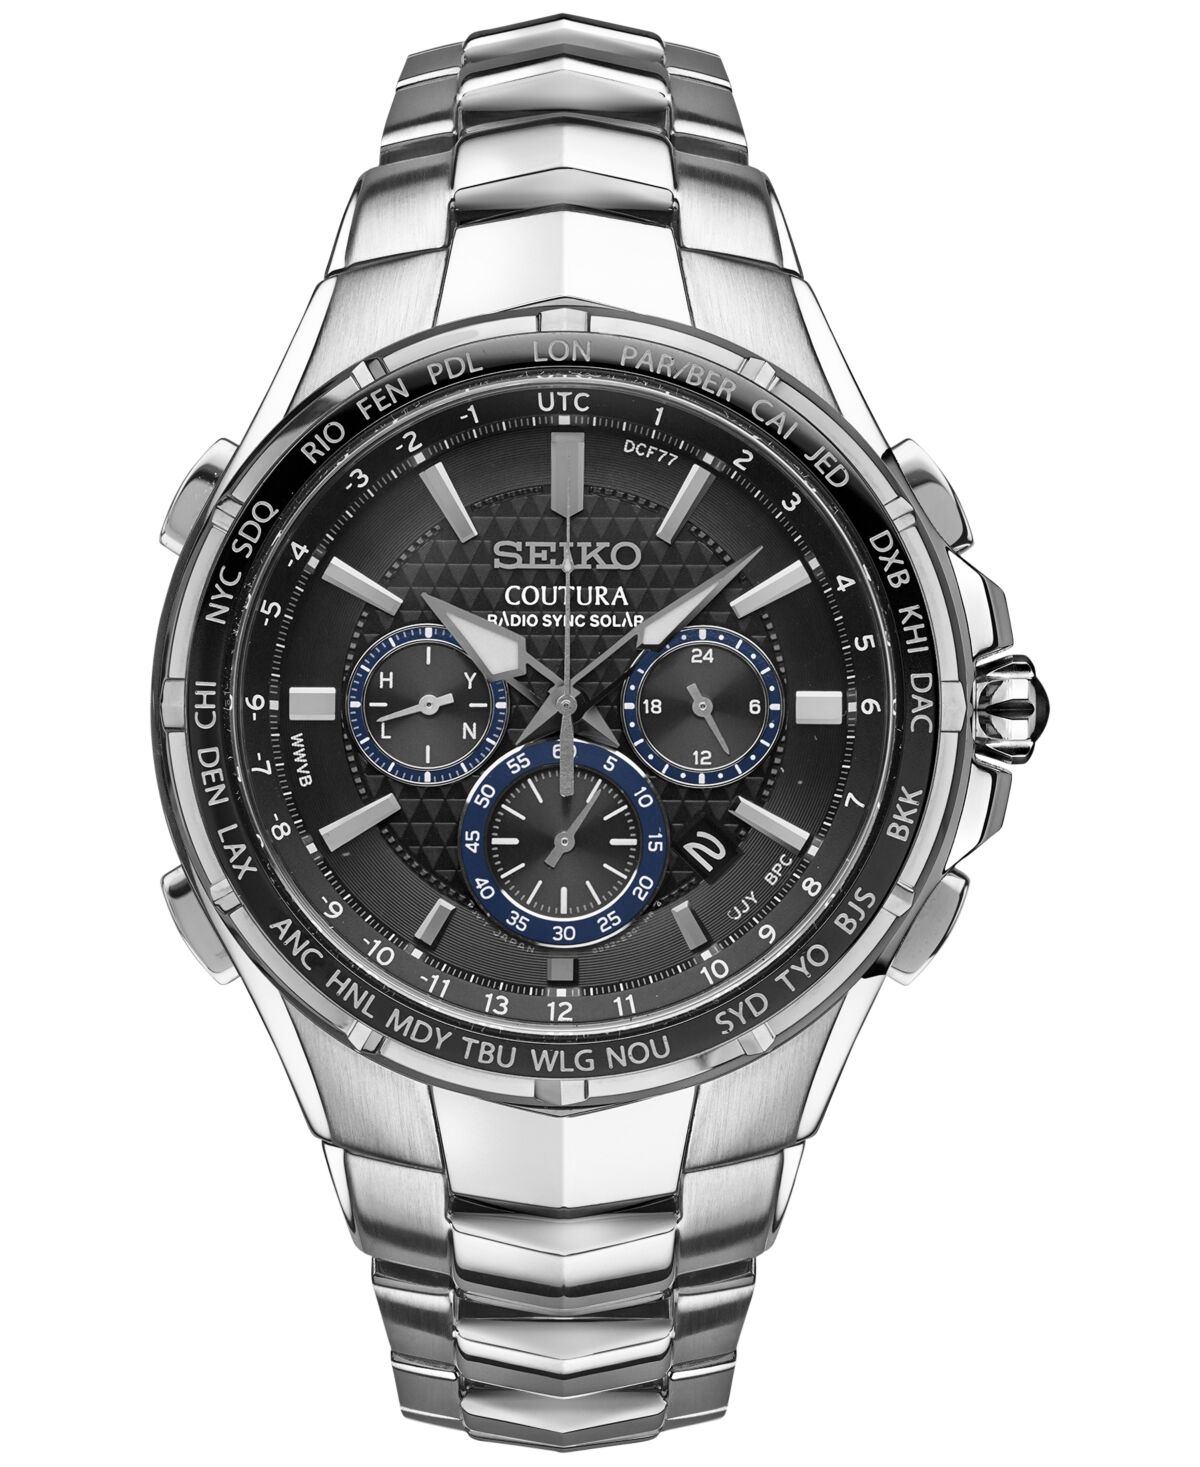 Seiko Men's Solar Chronograph Coutura Stainless Steel Bracelet Watch 45mm SSG009 - Silver